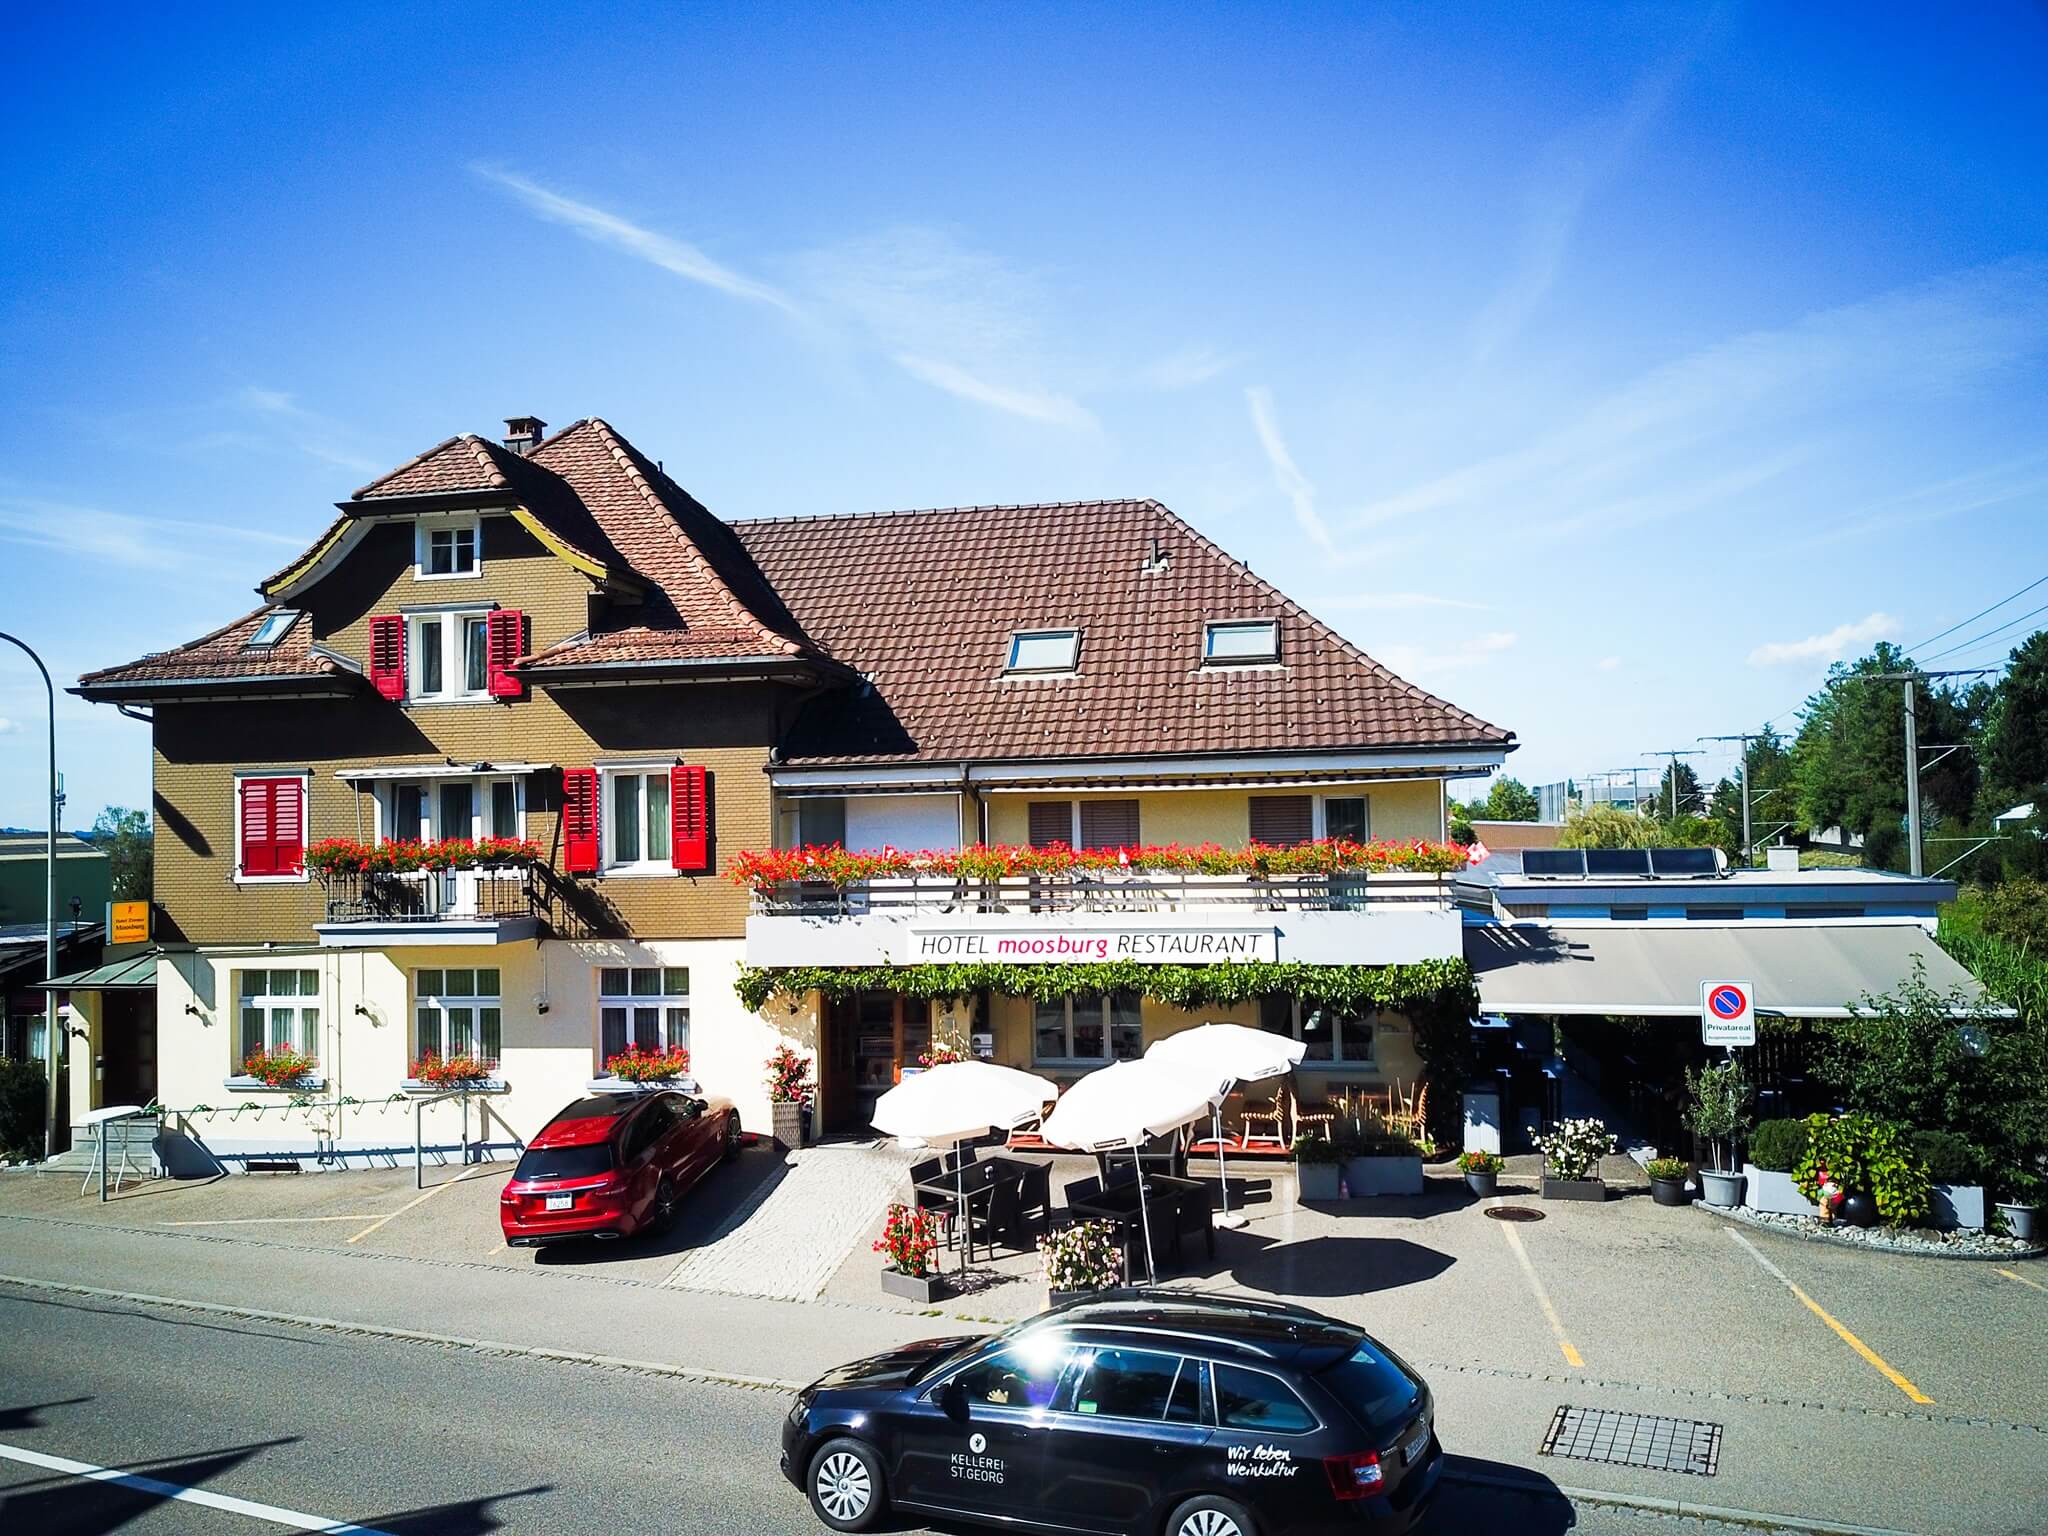 Hotel Restaurant Moosburg